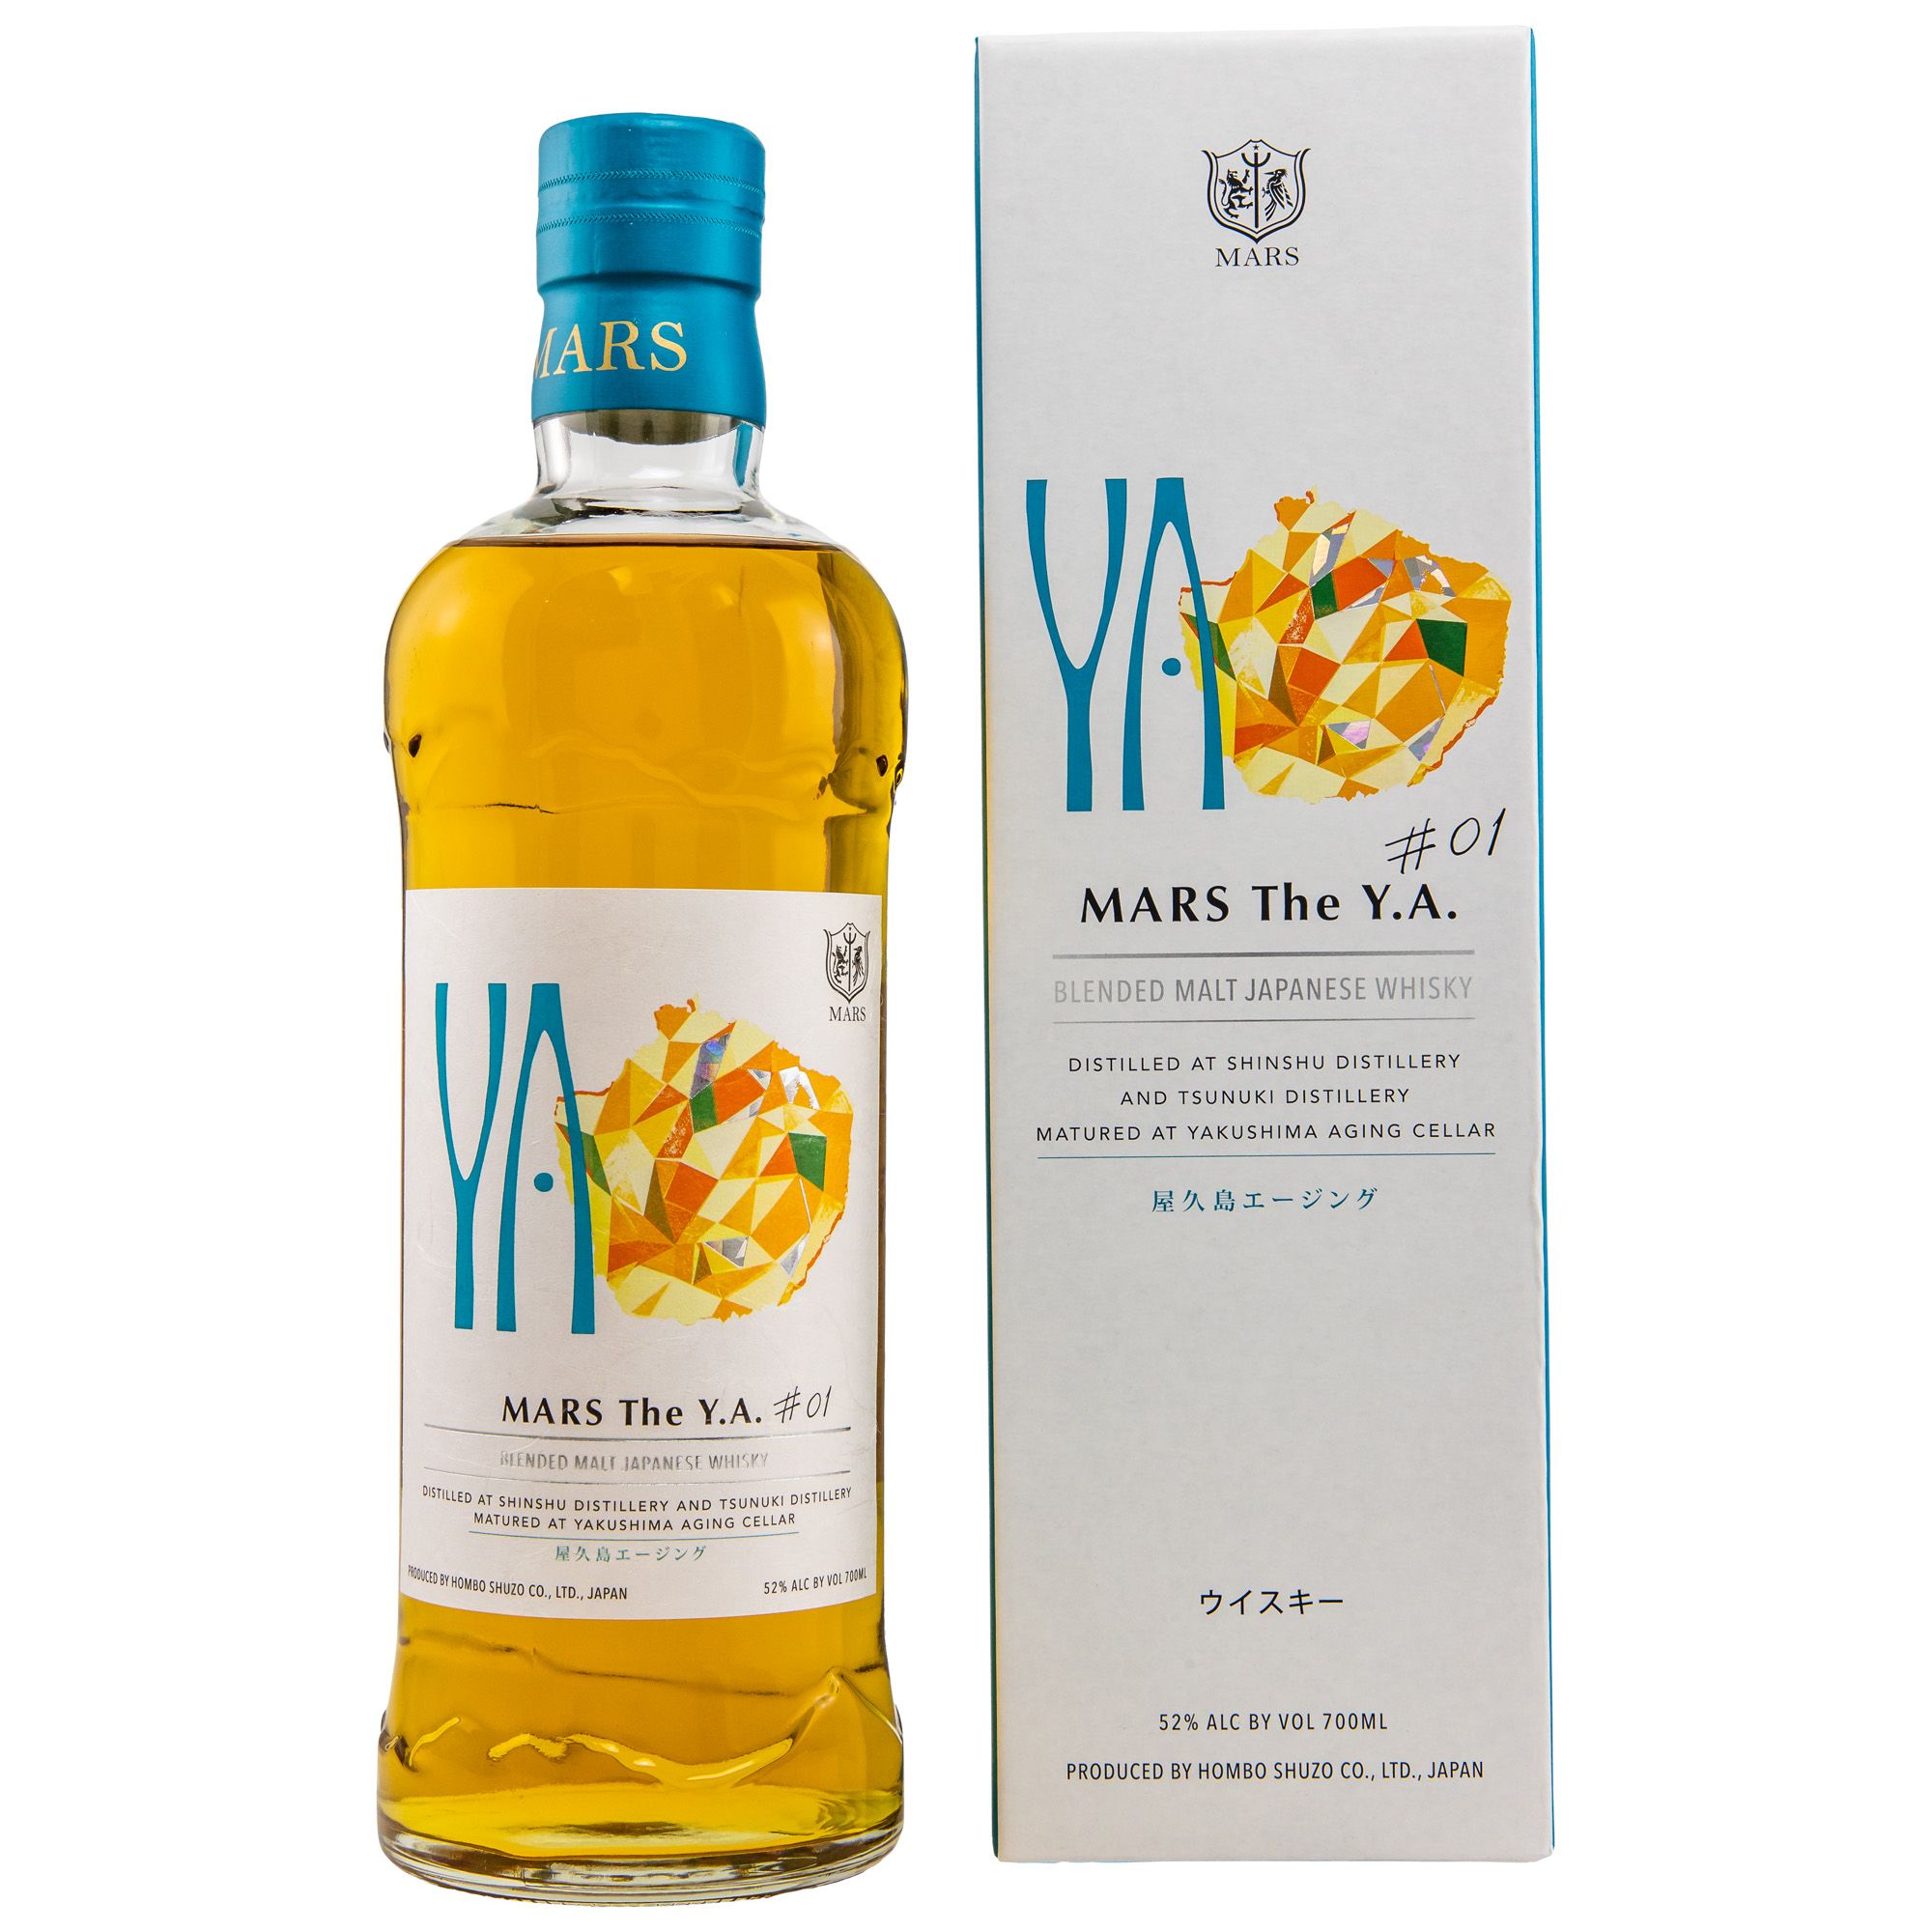 Mars The Y.A. #01 Japanese Blended Malt Whisky 52% 0,7l